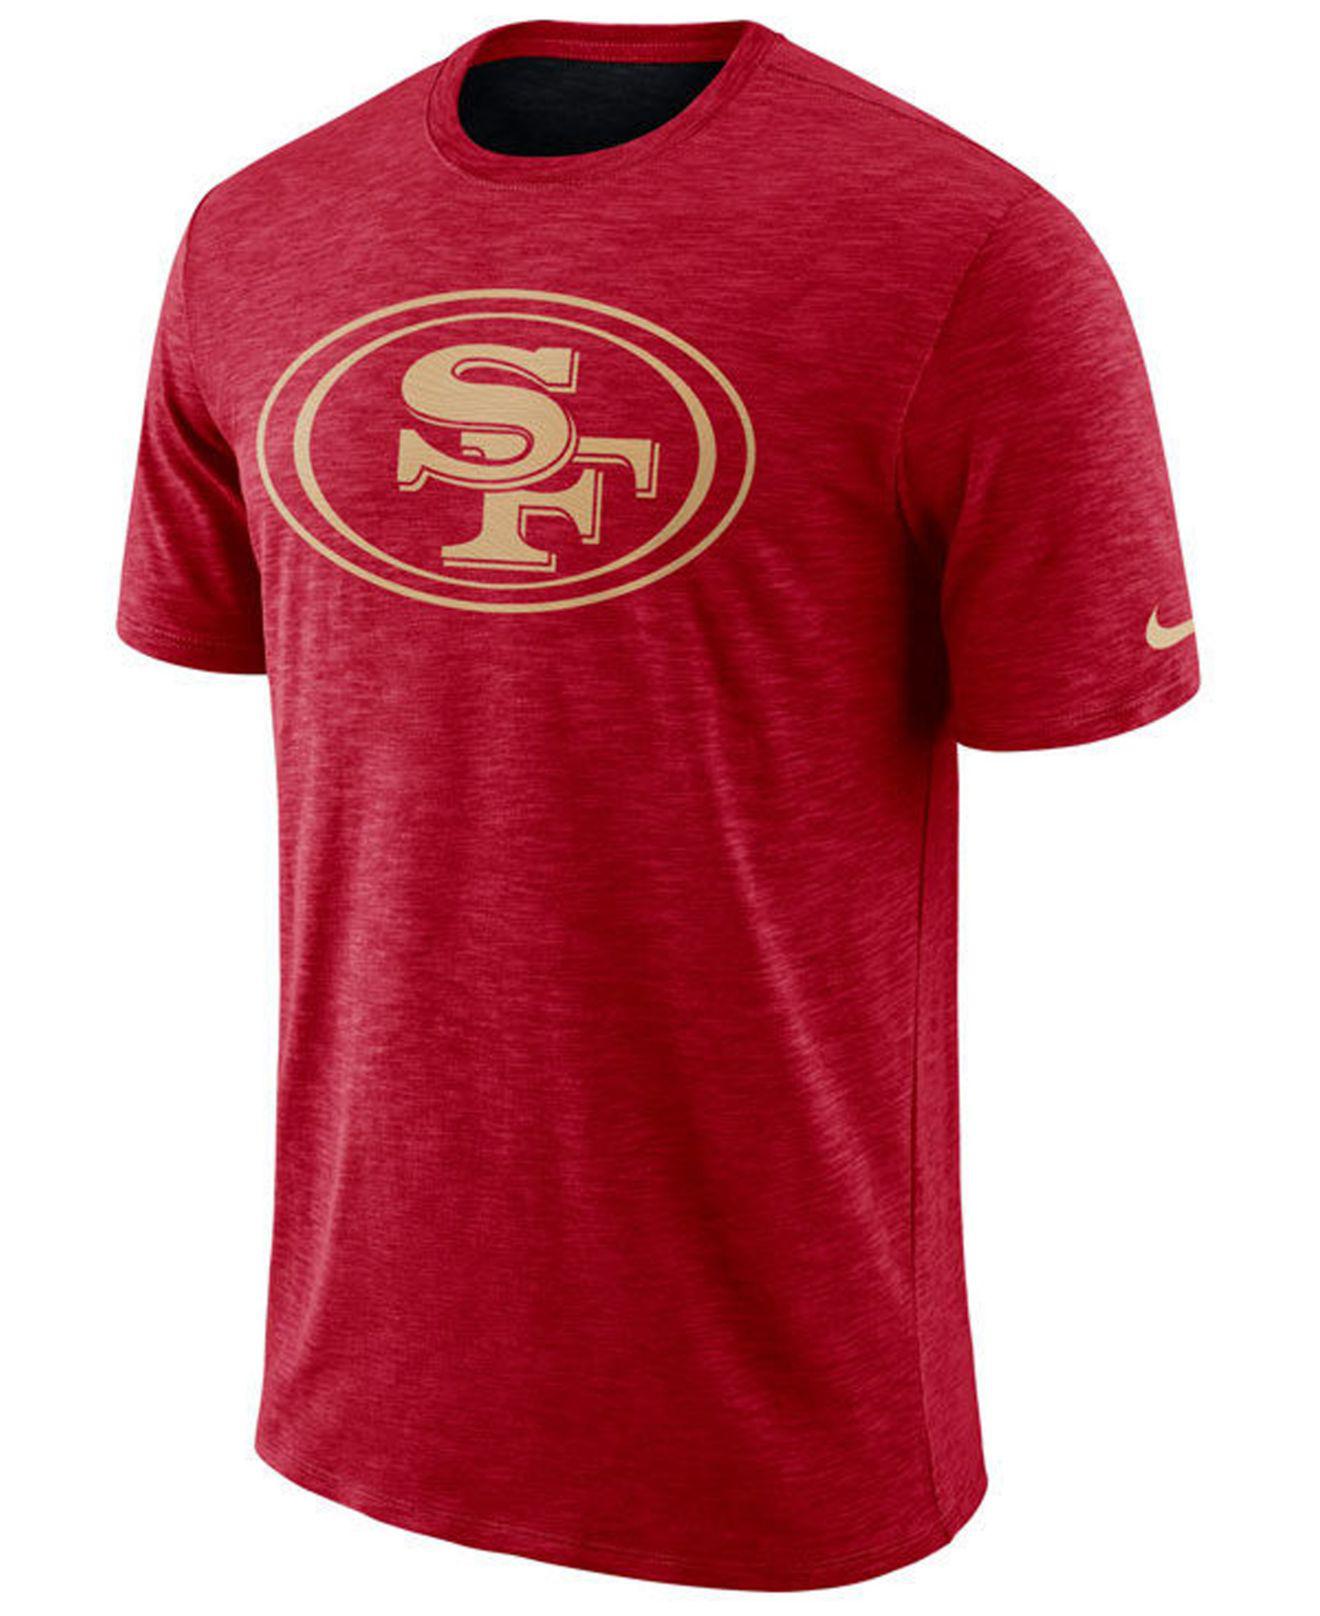 Lyst - Nike San Francisco 49ers Dri-fit Cotton Slub On-field T-shirt in ...